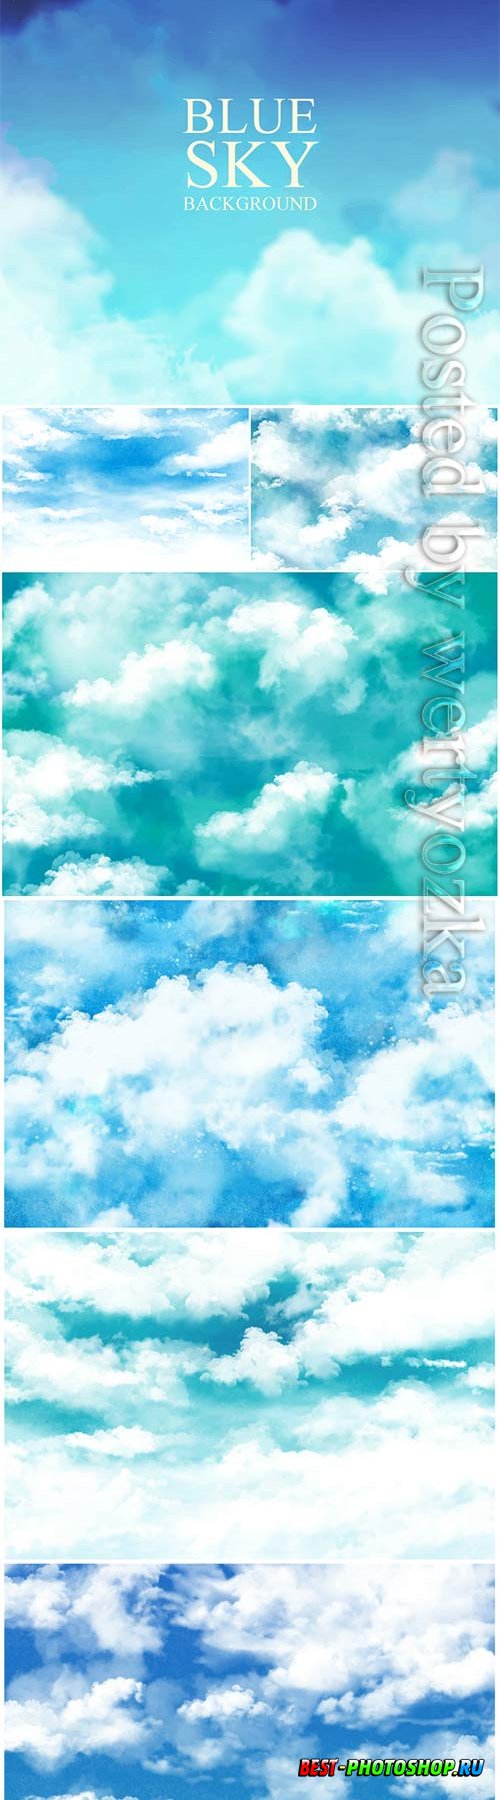 Sky paint texture vector background